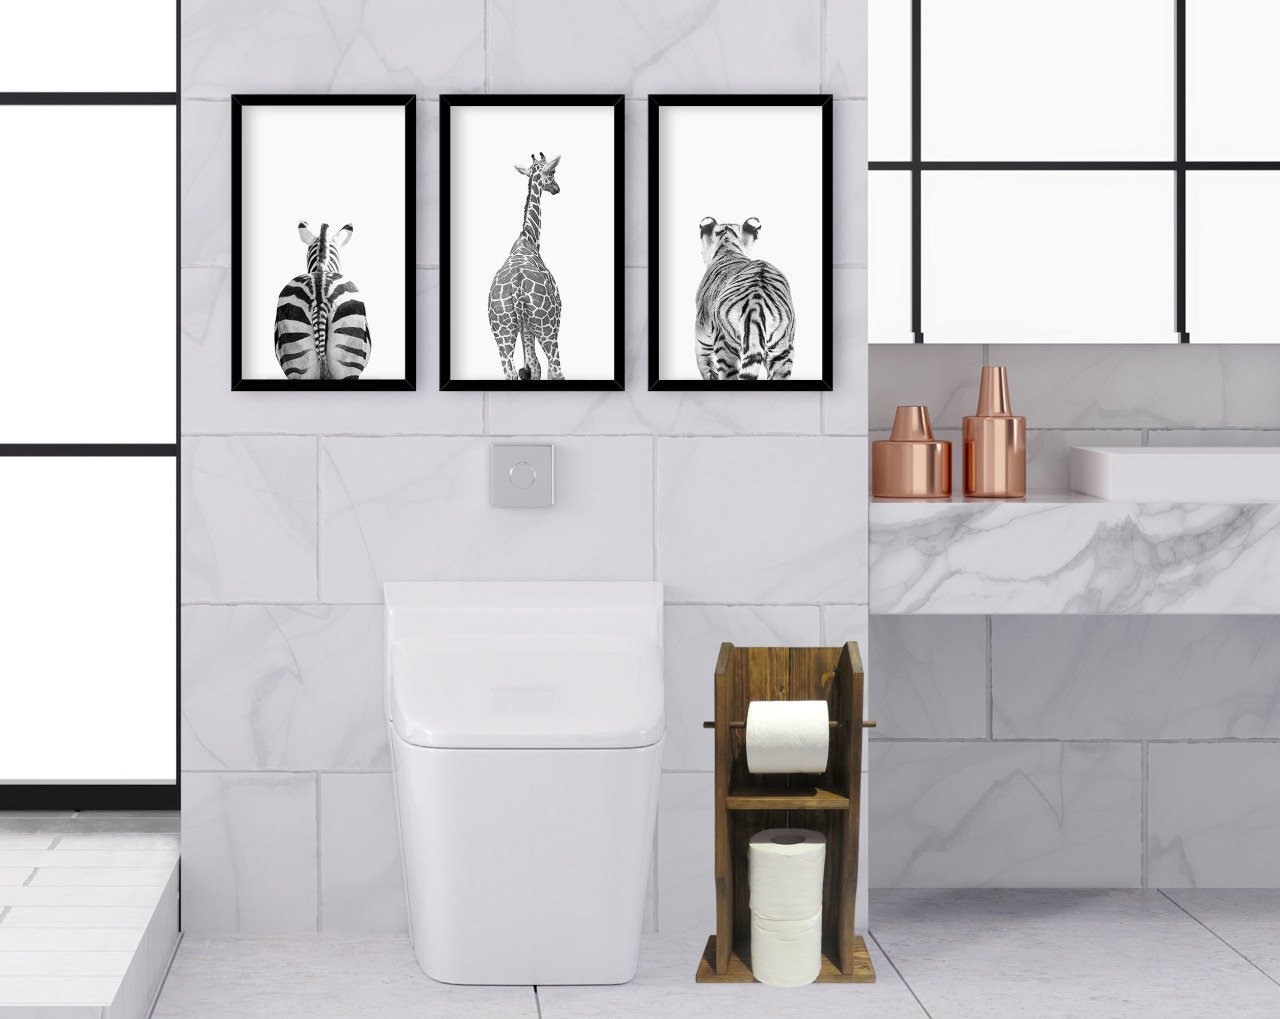 BK Home Doğal Masif Ahşap Tuvalet Kağıtlığı ve Dekoratif 3’lü Ahşap Siyah Çerçeveli Tablo-2